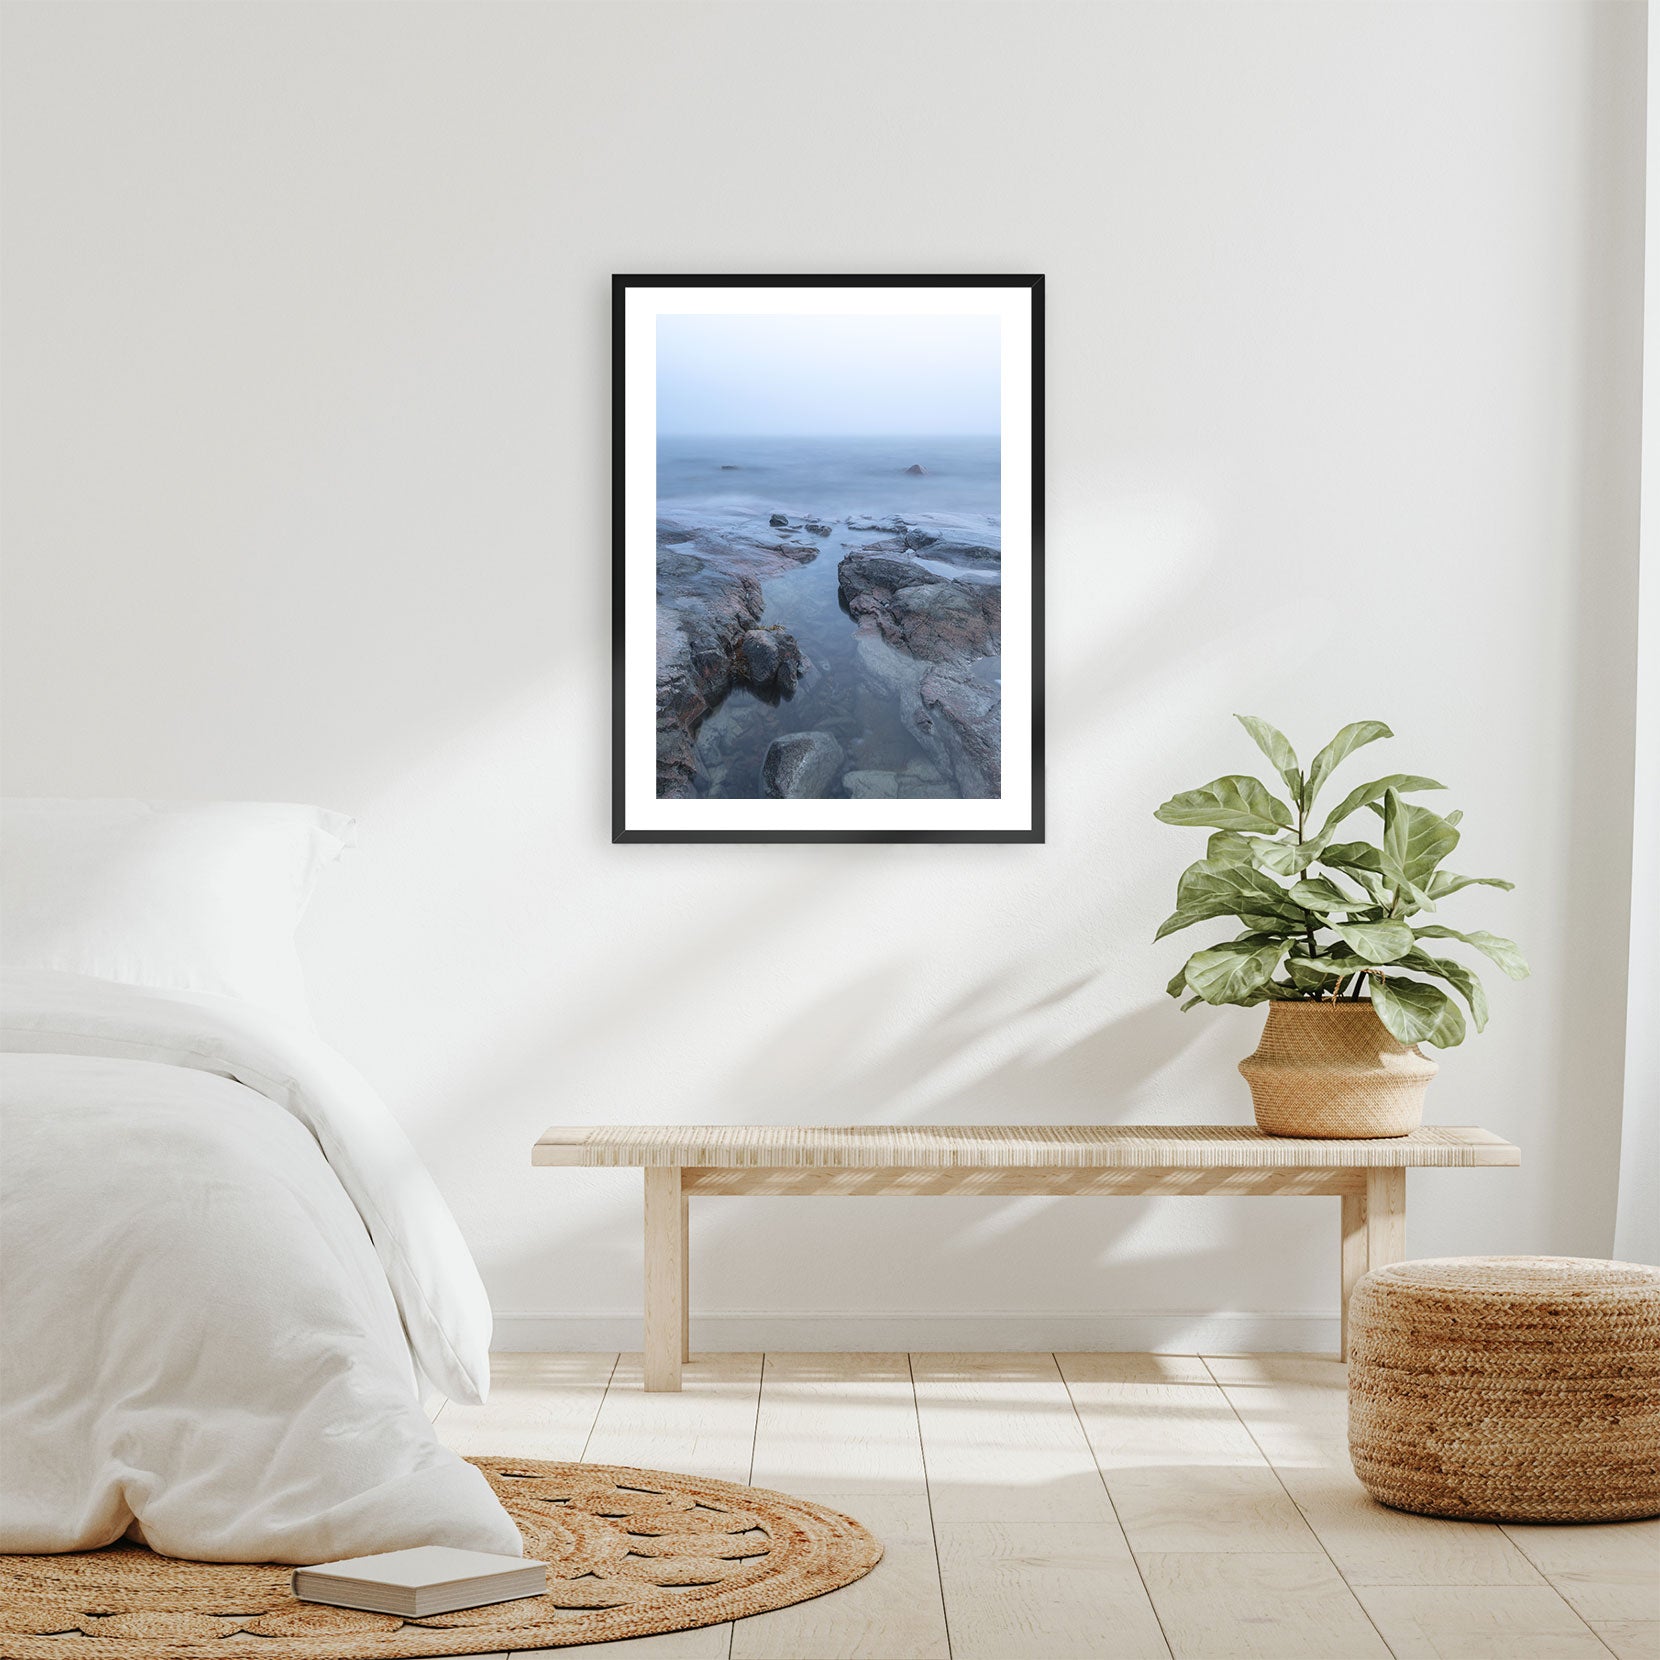 A framed print of a rocky coastline in fog